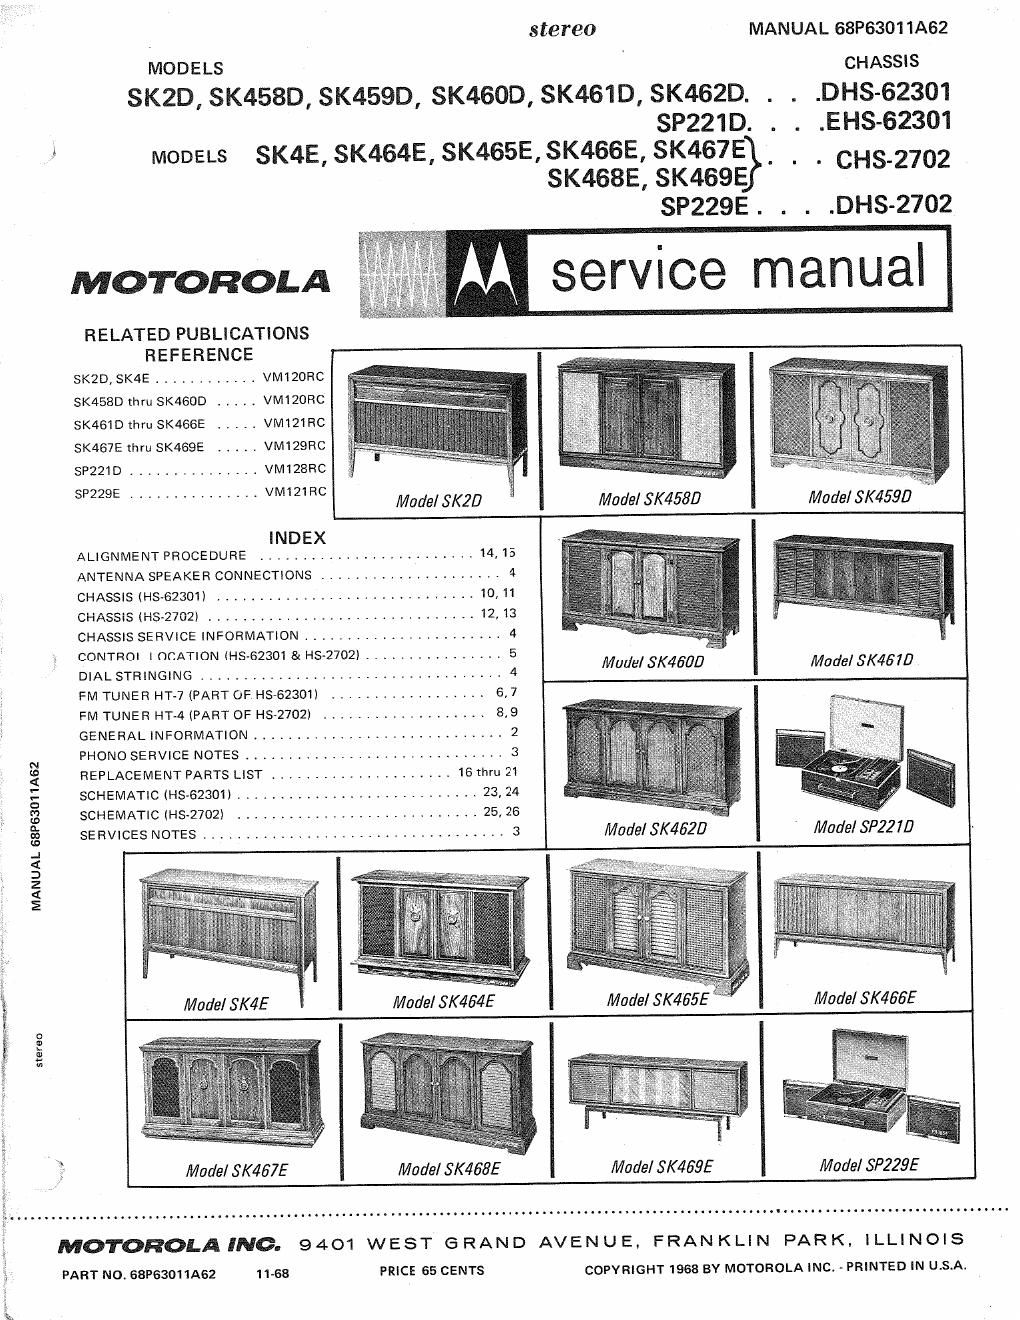 motorola sk 469 e service manual